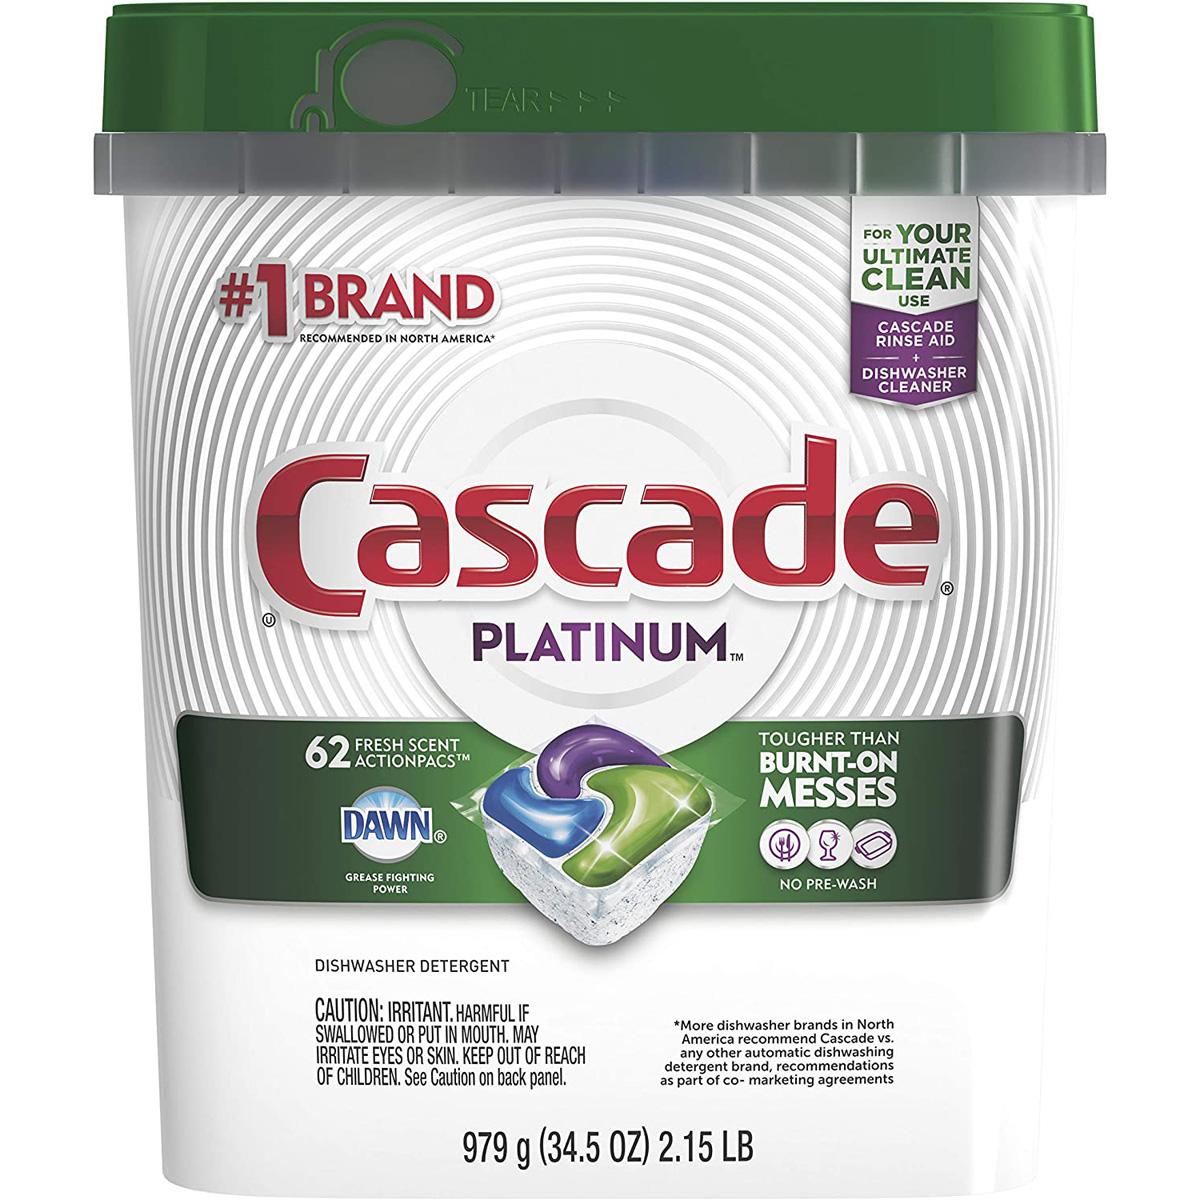 124 Cascade Platinum Dishwasher Detergent ActionPacs for $23.94 Shipped